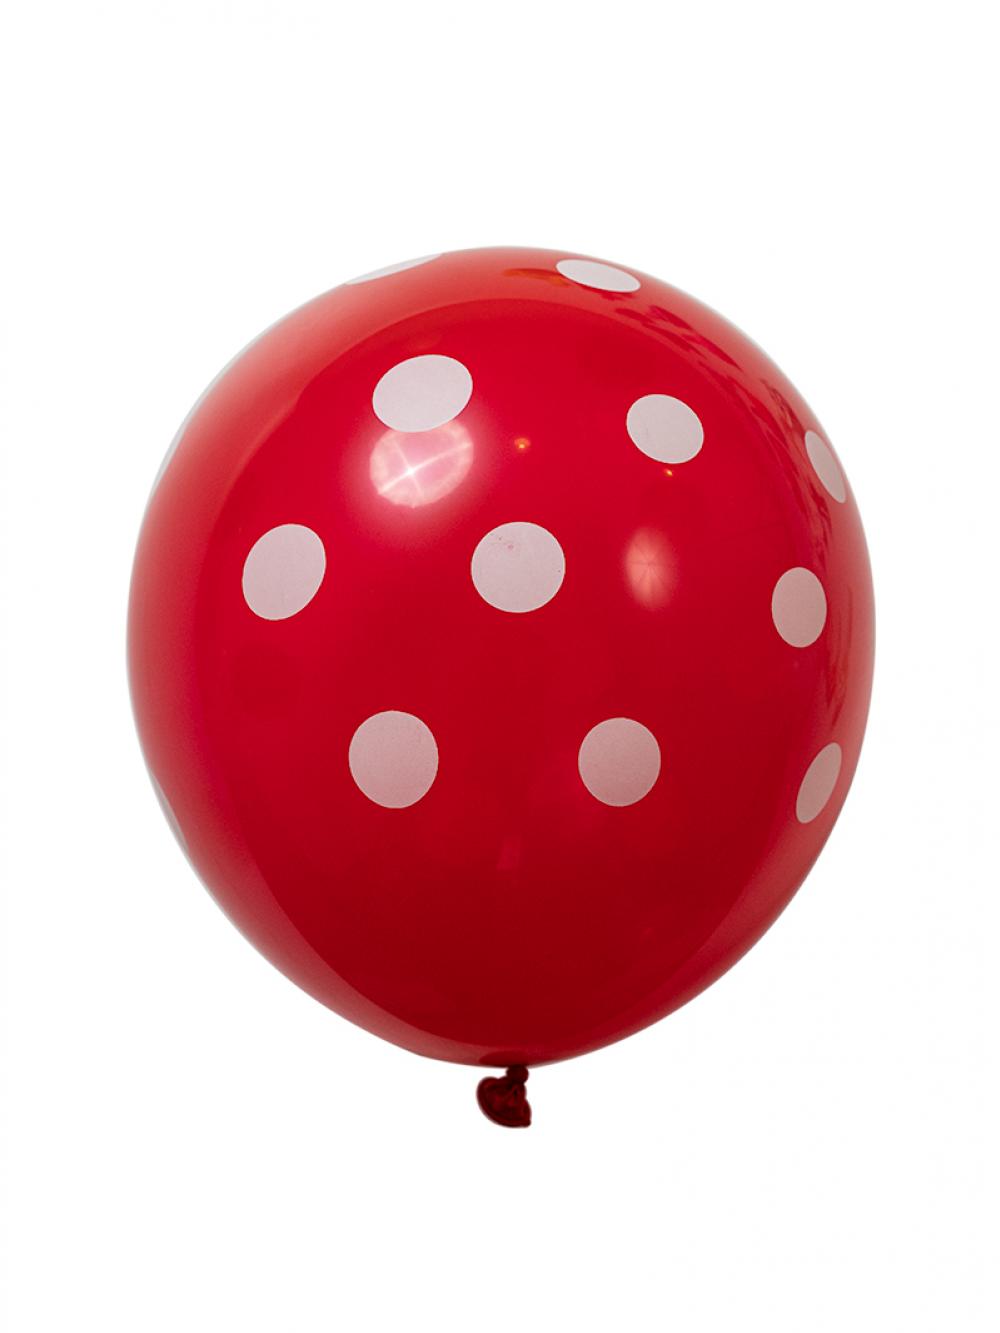 12 Inch Standard Polka Dot Balloons Red Balloon White Dot (100PCS)